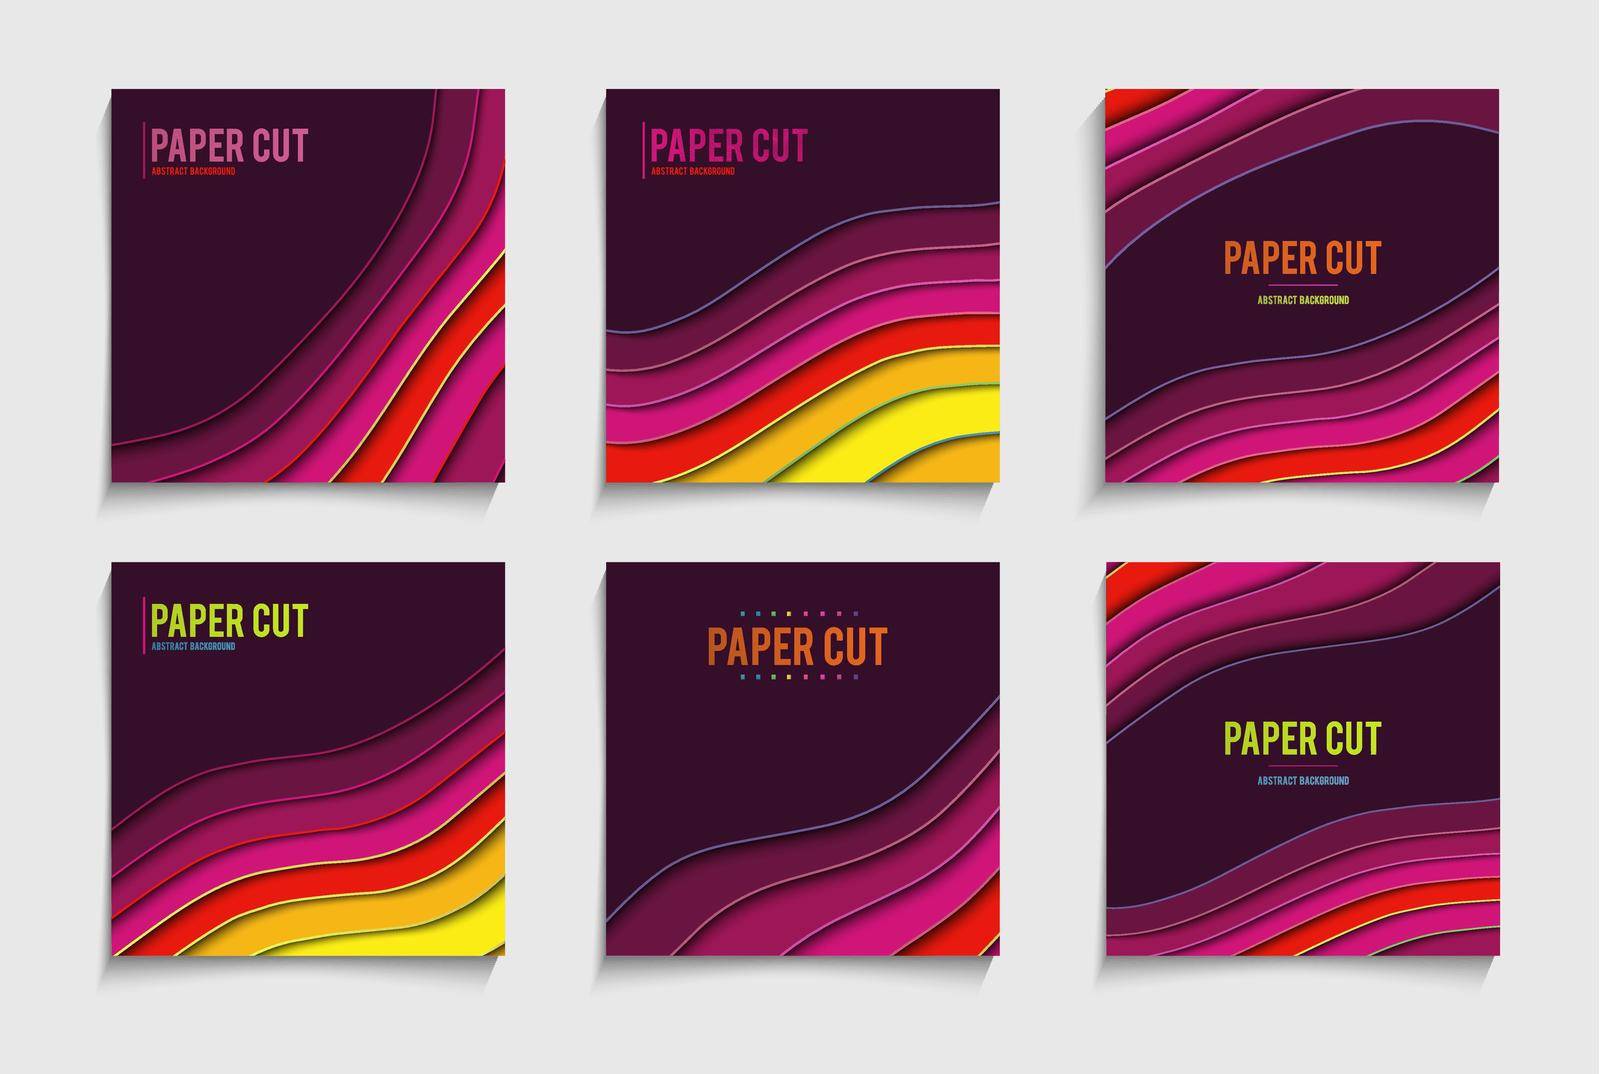 Abstract paper cut social media post. Paper cut poster cover vector design template.